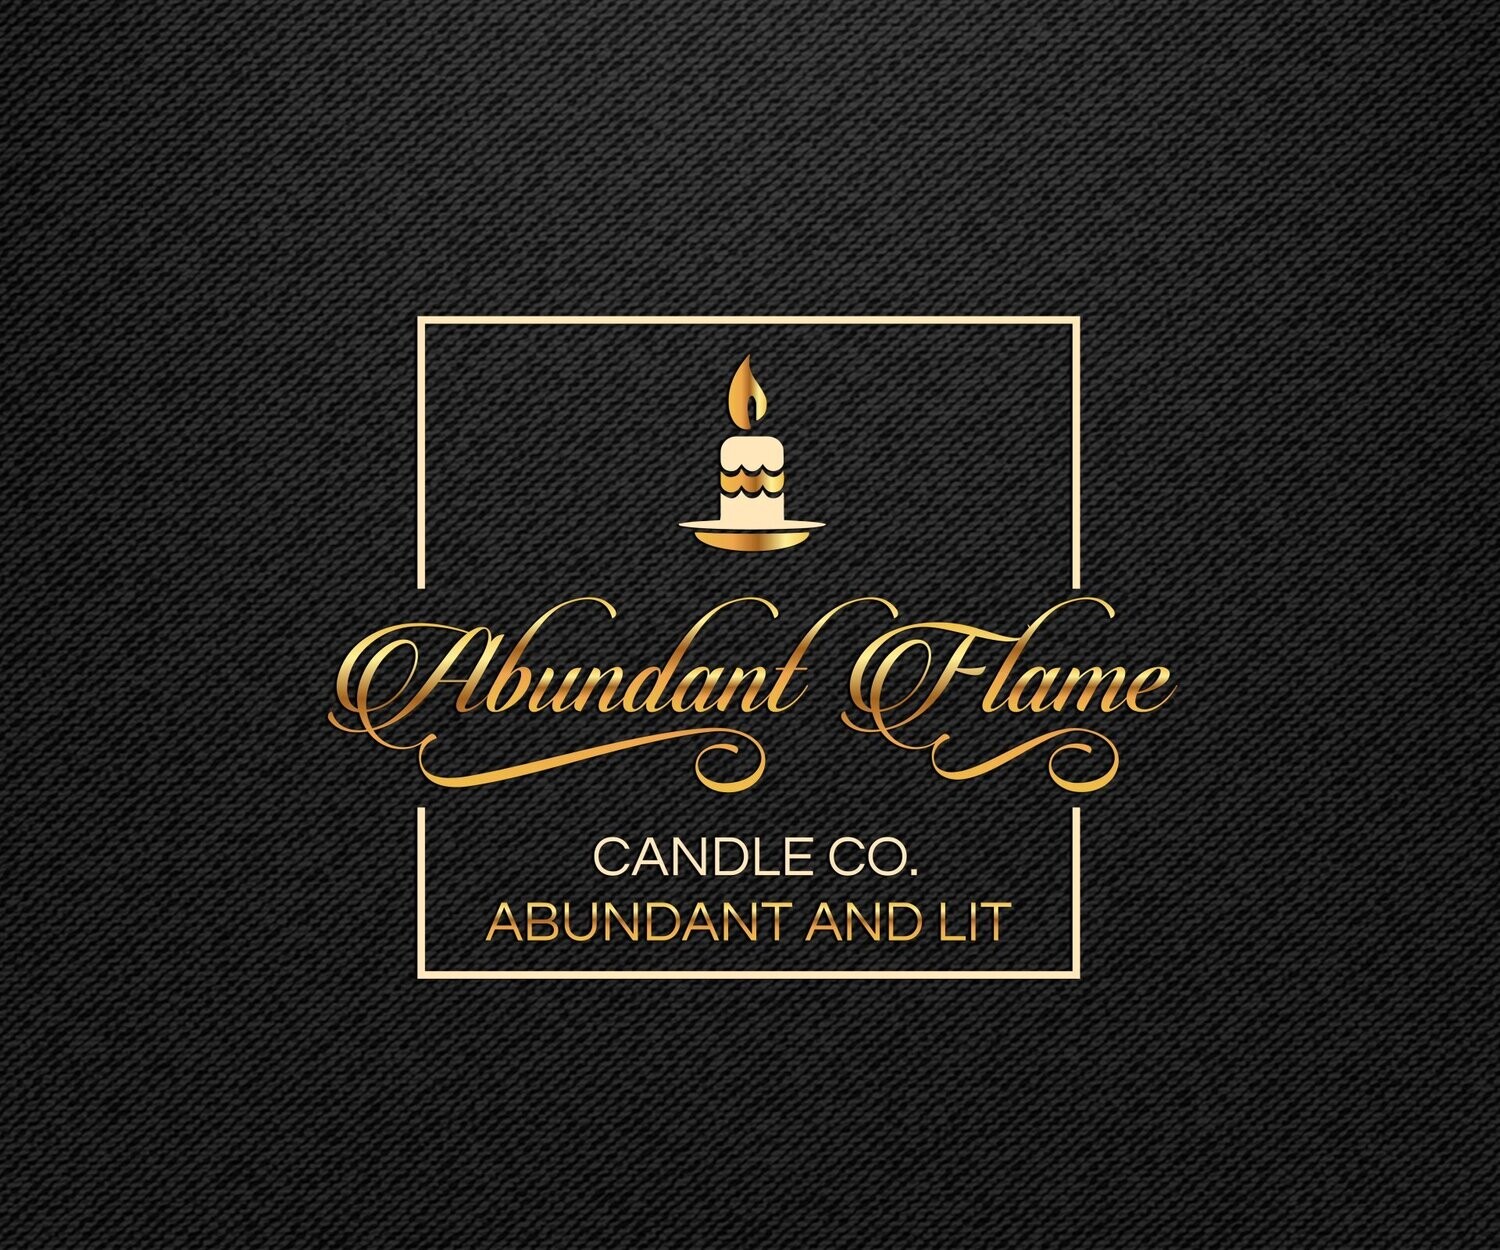 Abundant Flame Candle Co.- Gift Card